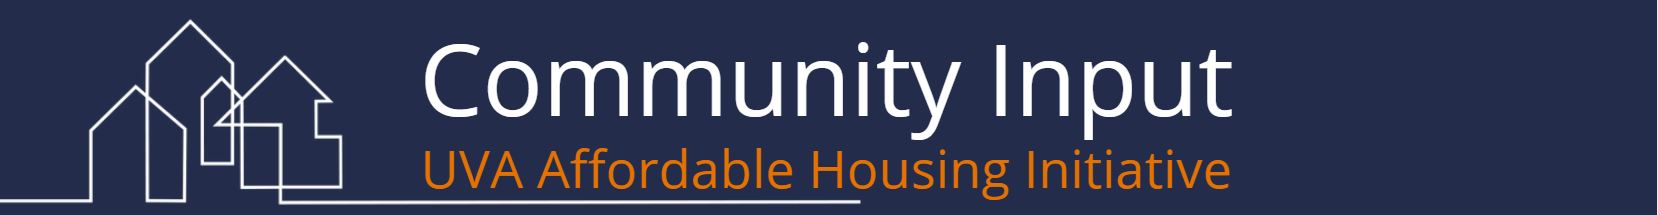 Community Input, UVA Affordable Housing Initiative